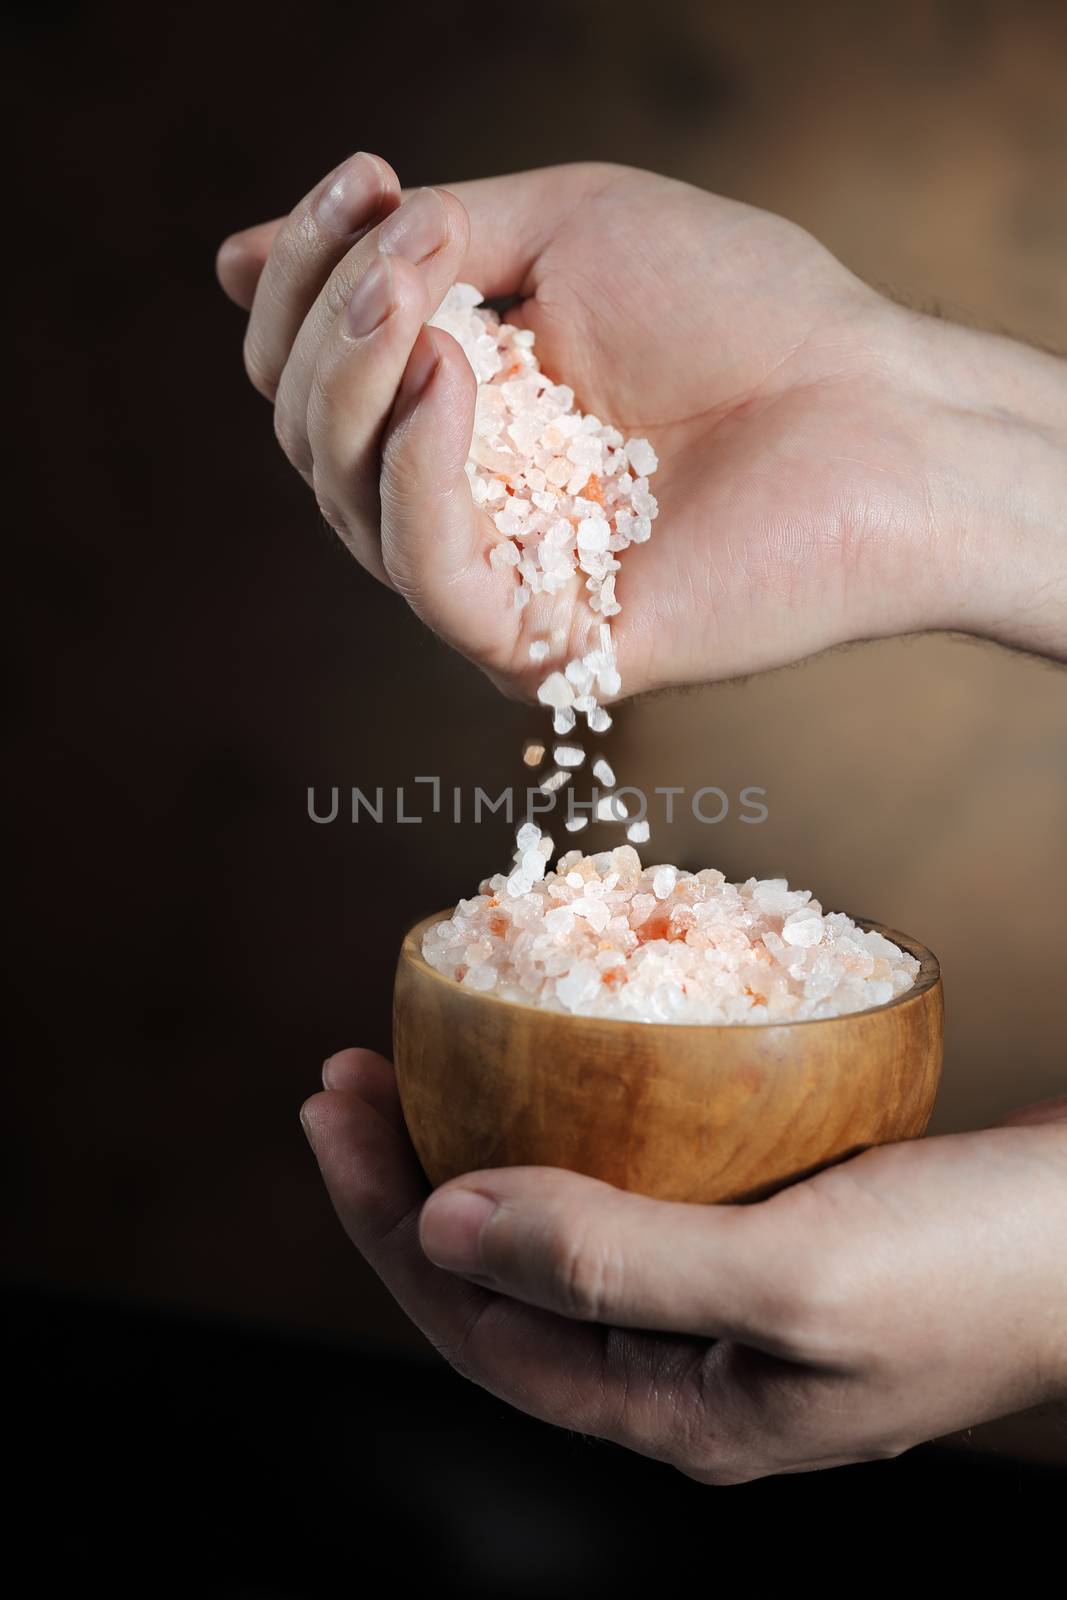 HImalayan Salt by Stocksnapper